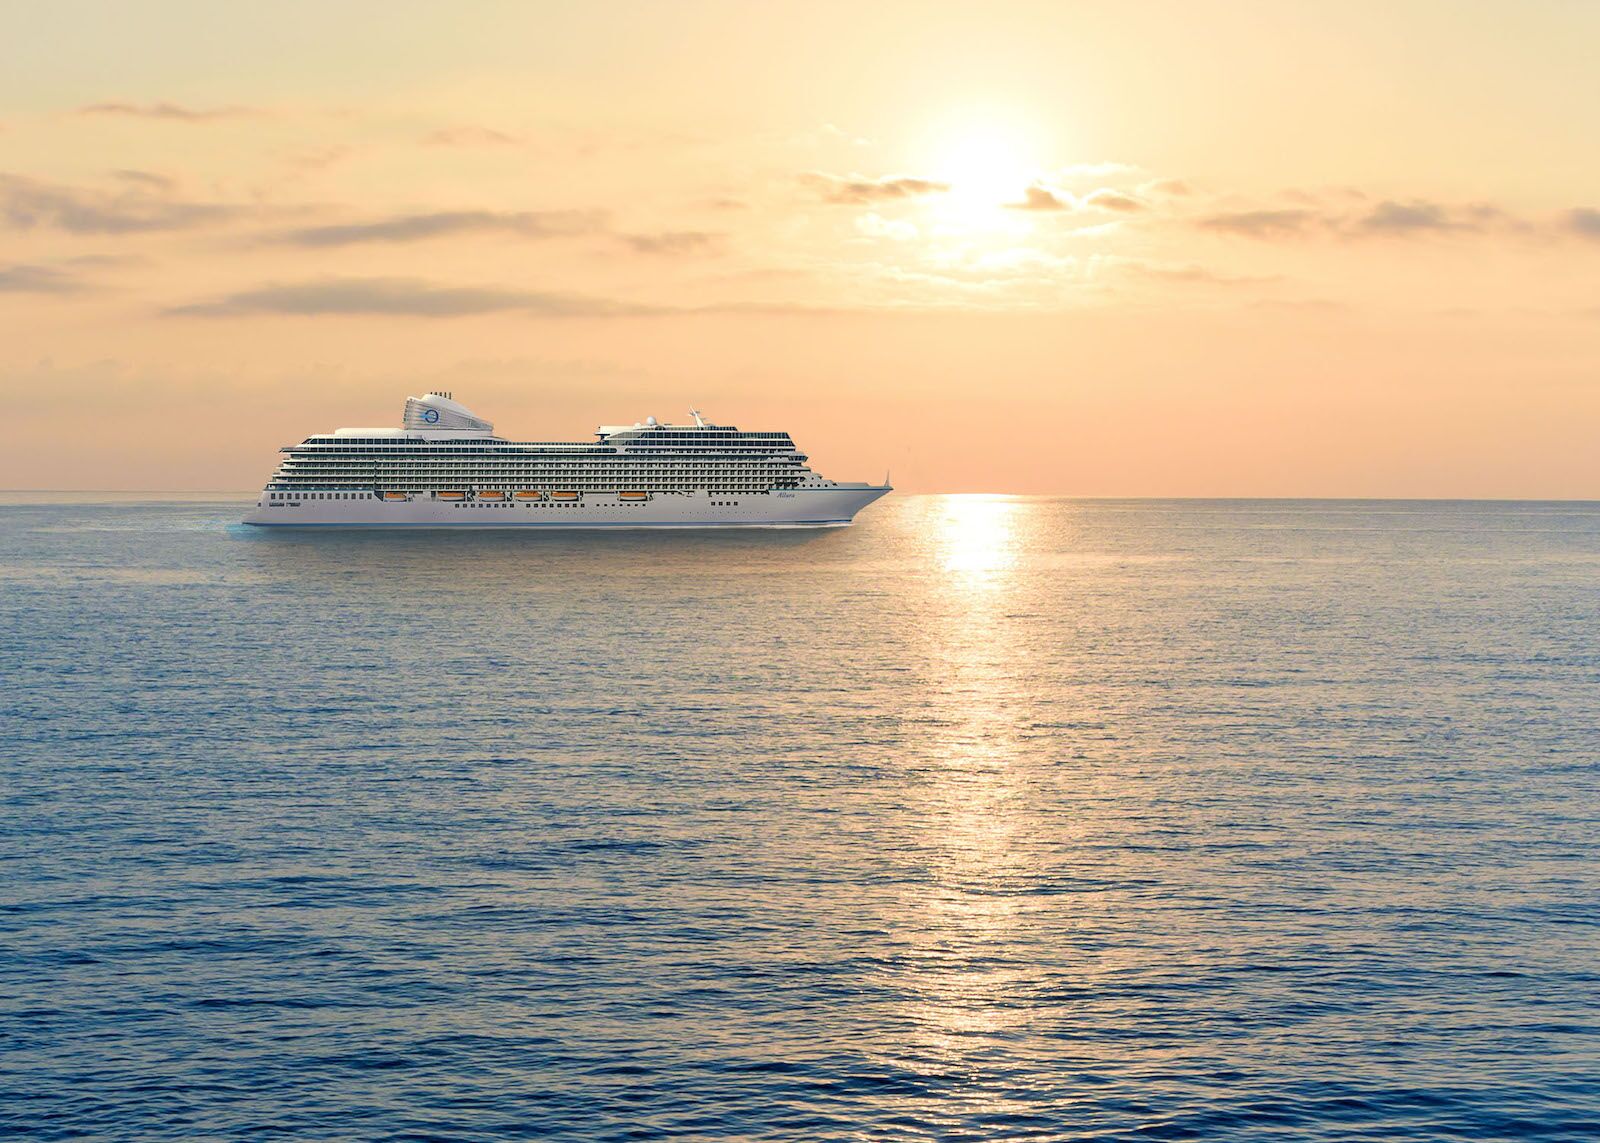 Oceania Cruises' new ship, Allura, launching in 2025